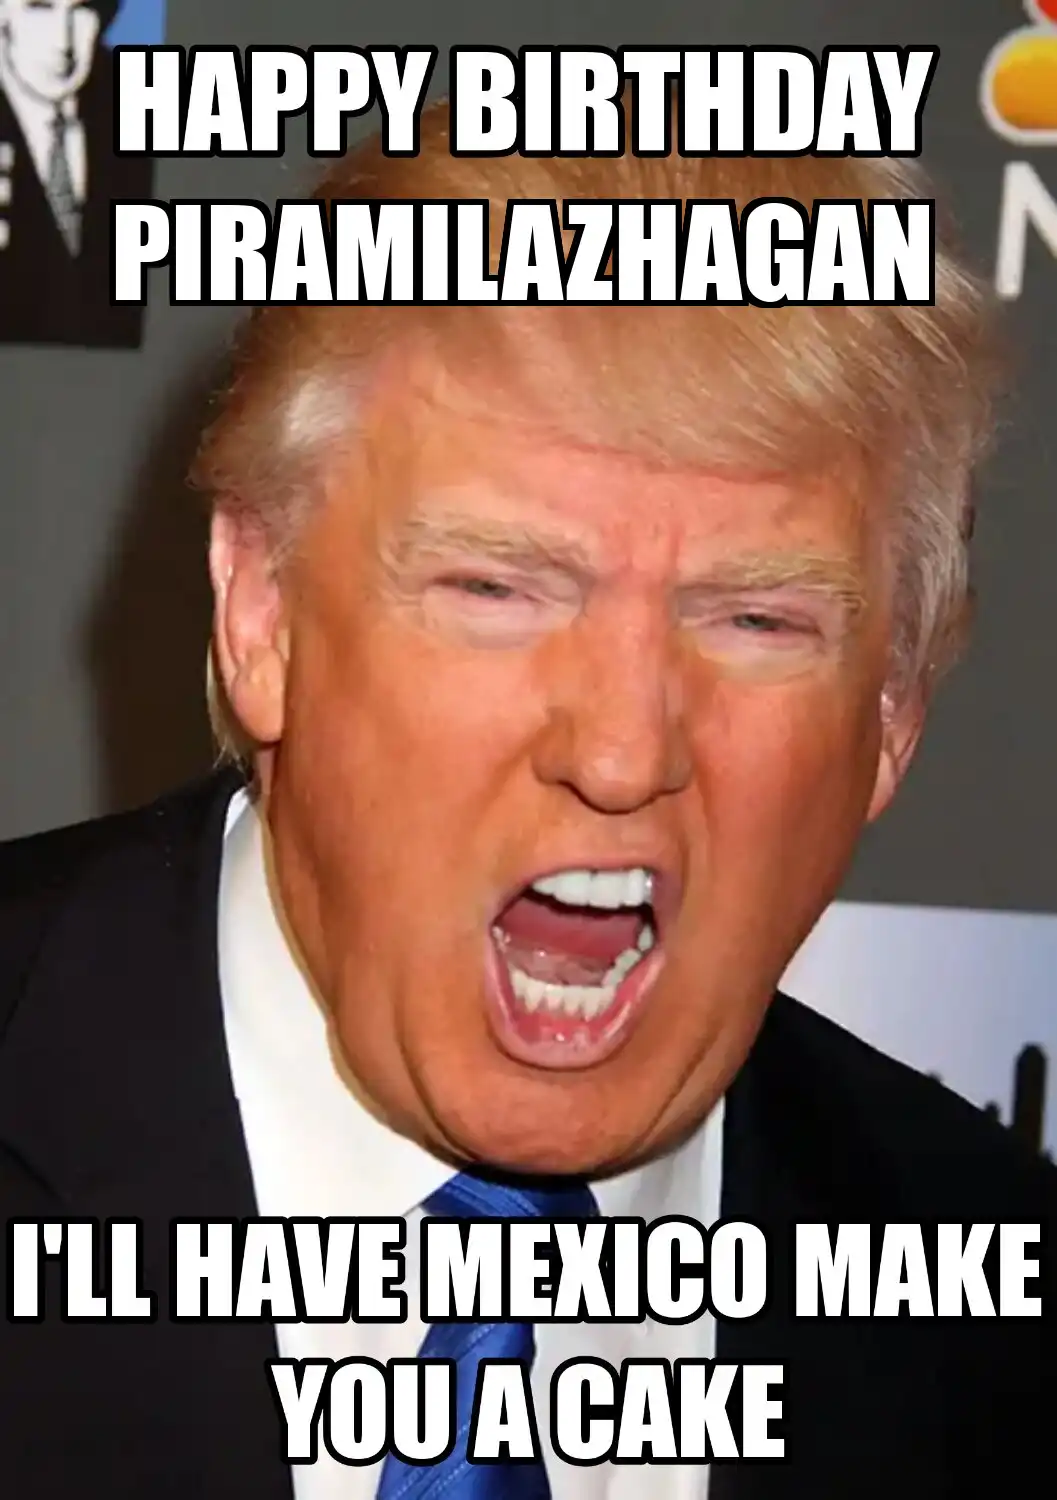 Happy Birthday Piramilazhagan Mexico Make You A Cake Meme